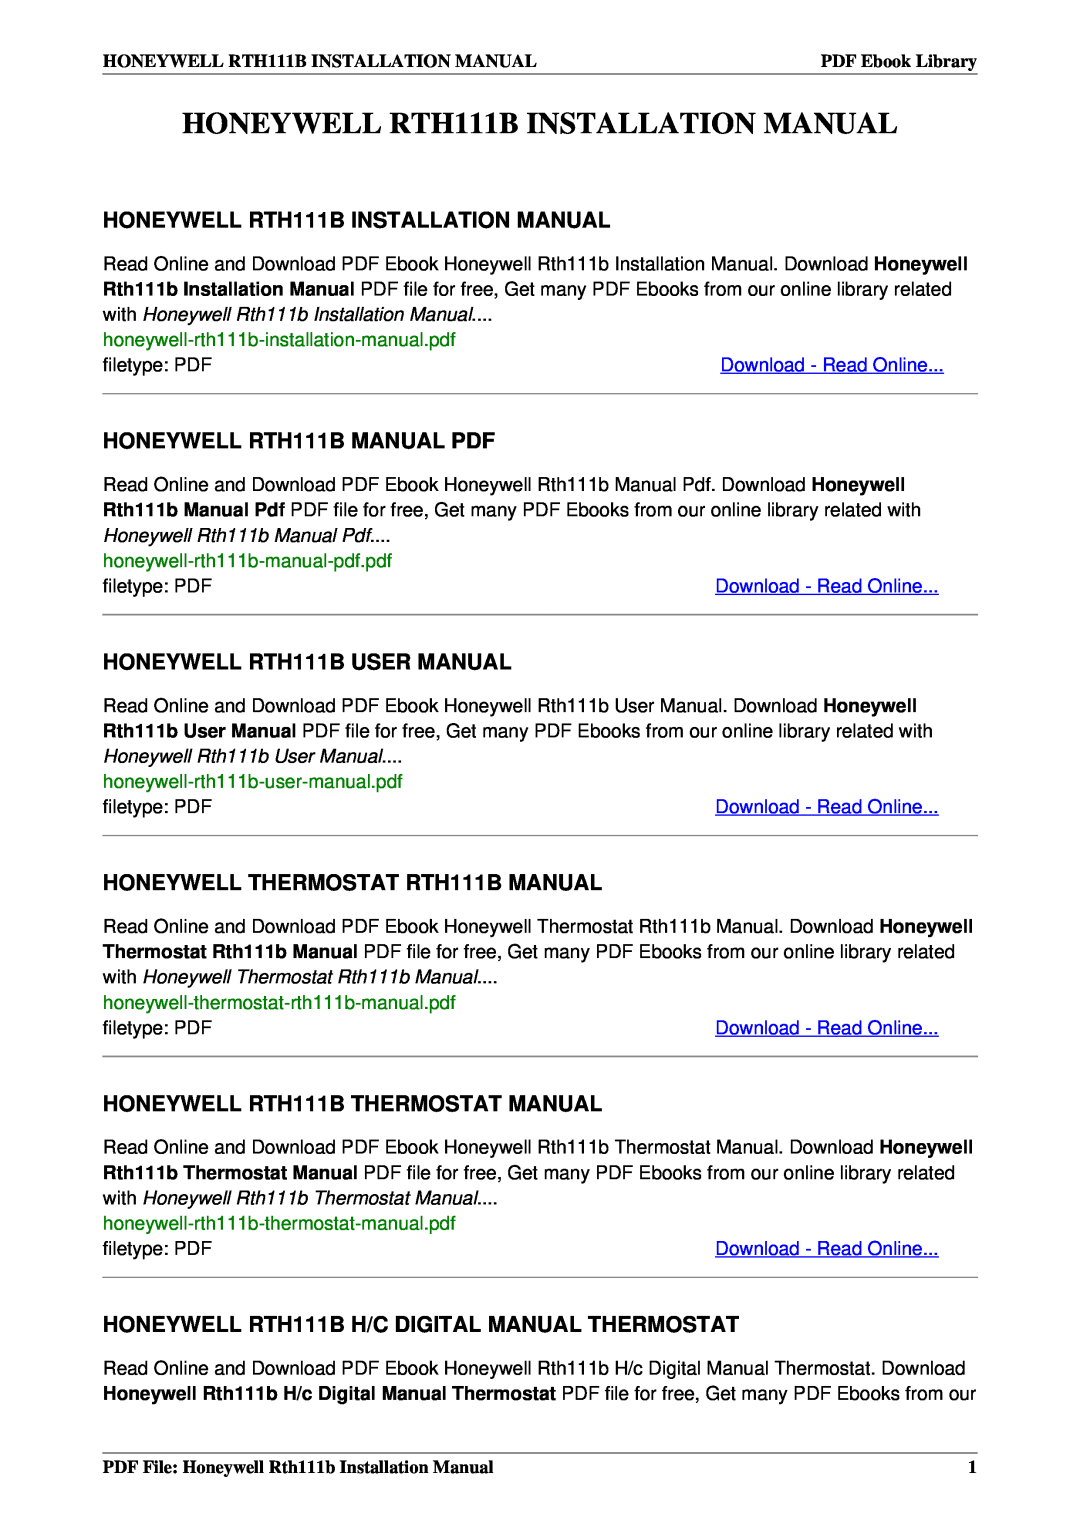 Honeywell installation manual HONEYWELL RTH111B INSTALLATION MANUAL, HONEYWELL RTH111B MANUAL PDF, filetype PDF 